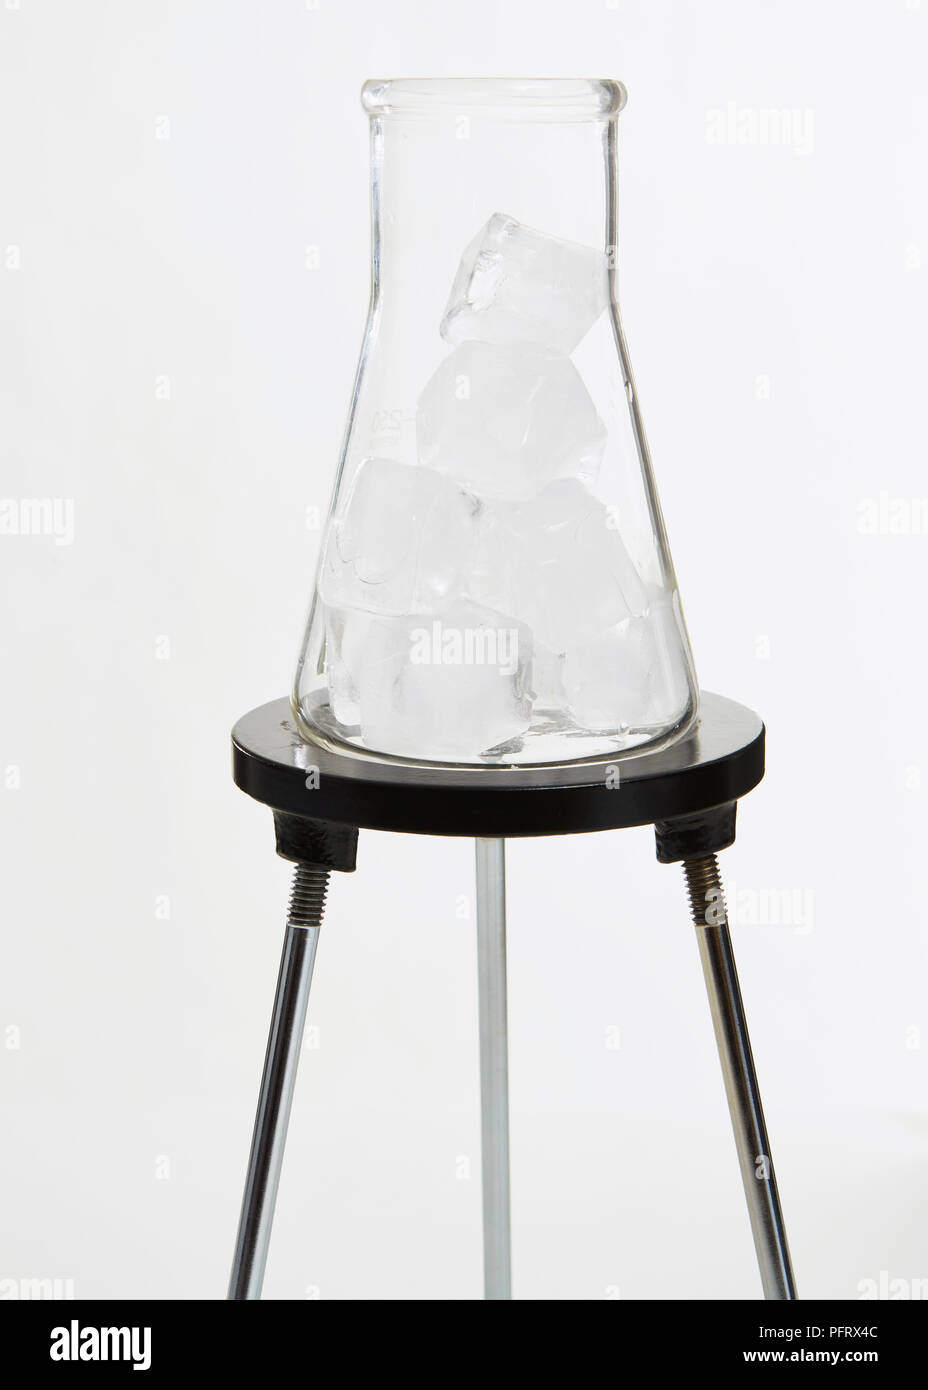 Matraz Erlenmeyer de vidrio sobre un trípode con cubitos de hielo. Foto de stock